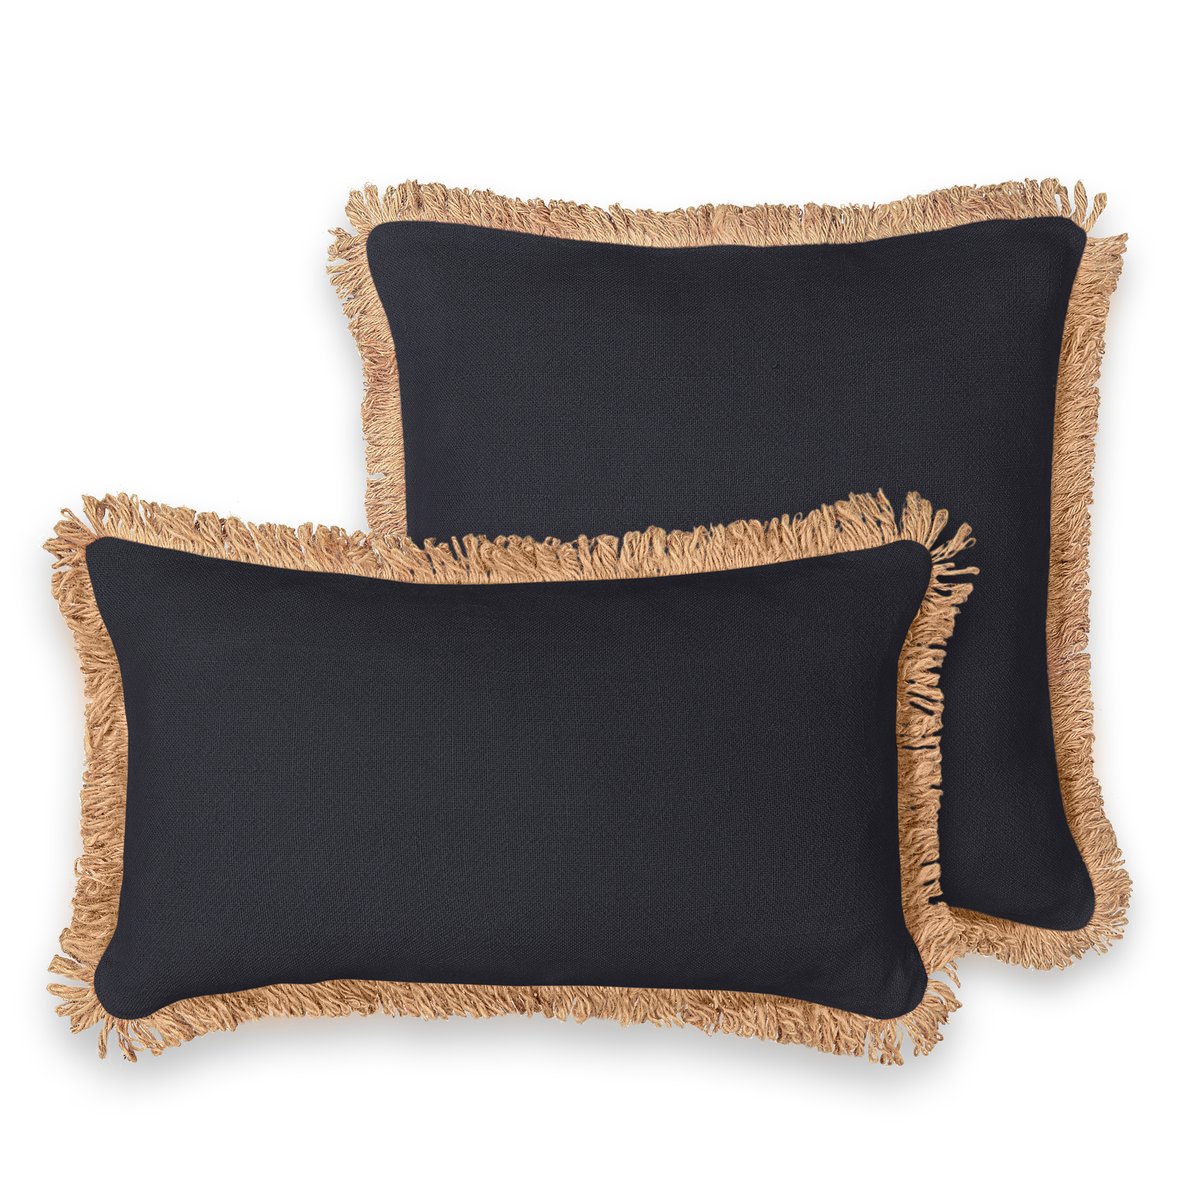 Чехол LaRedoute На подушку из джута Jutty 50 x 30 см черный, размер 50 x 30 см - фото 3